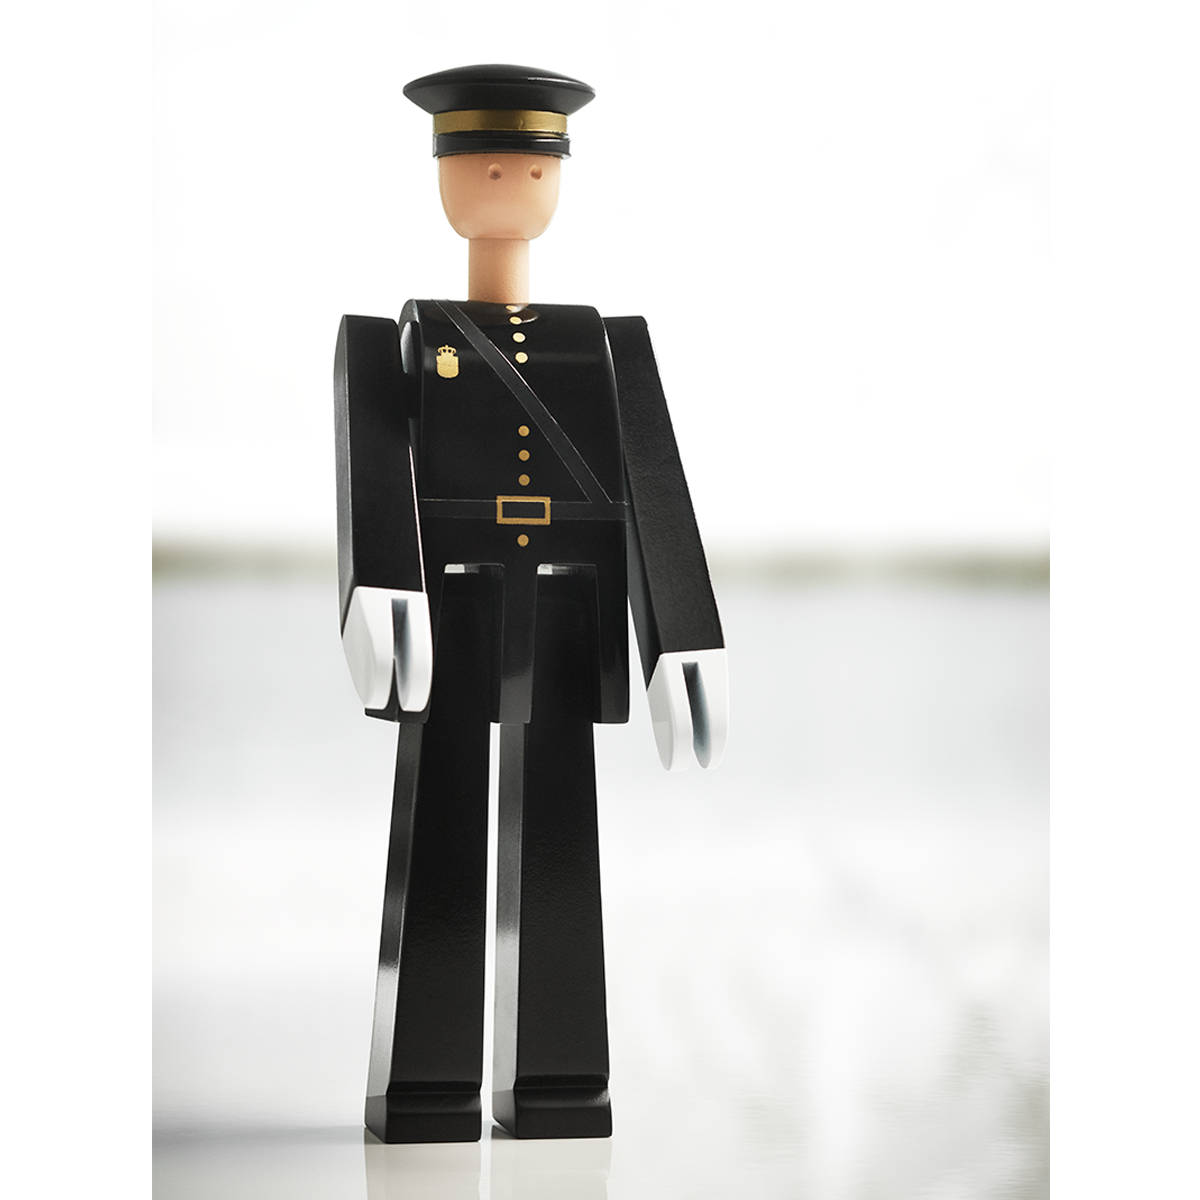 Kay Bojesen POLICE Officer Figurine